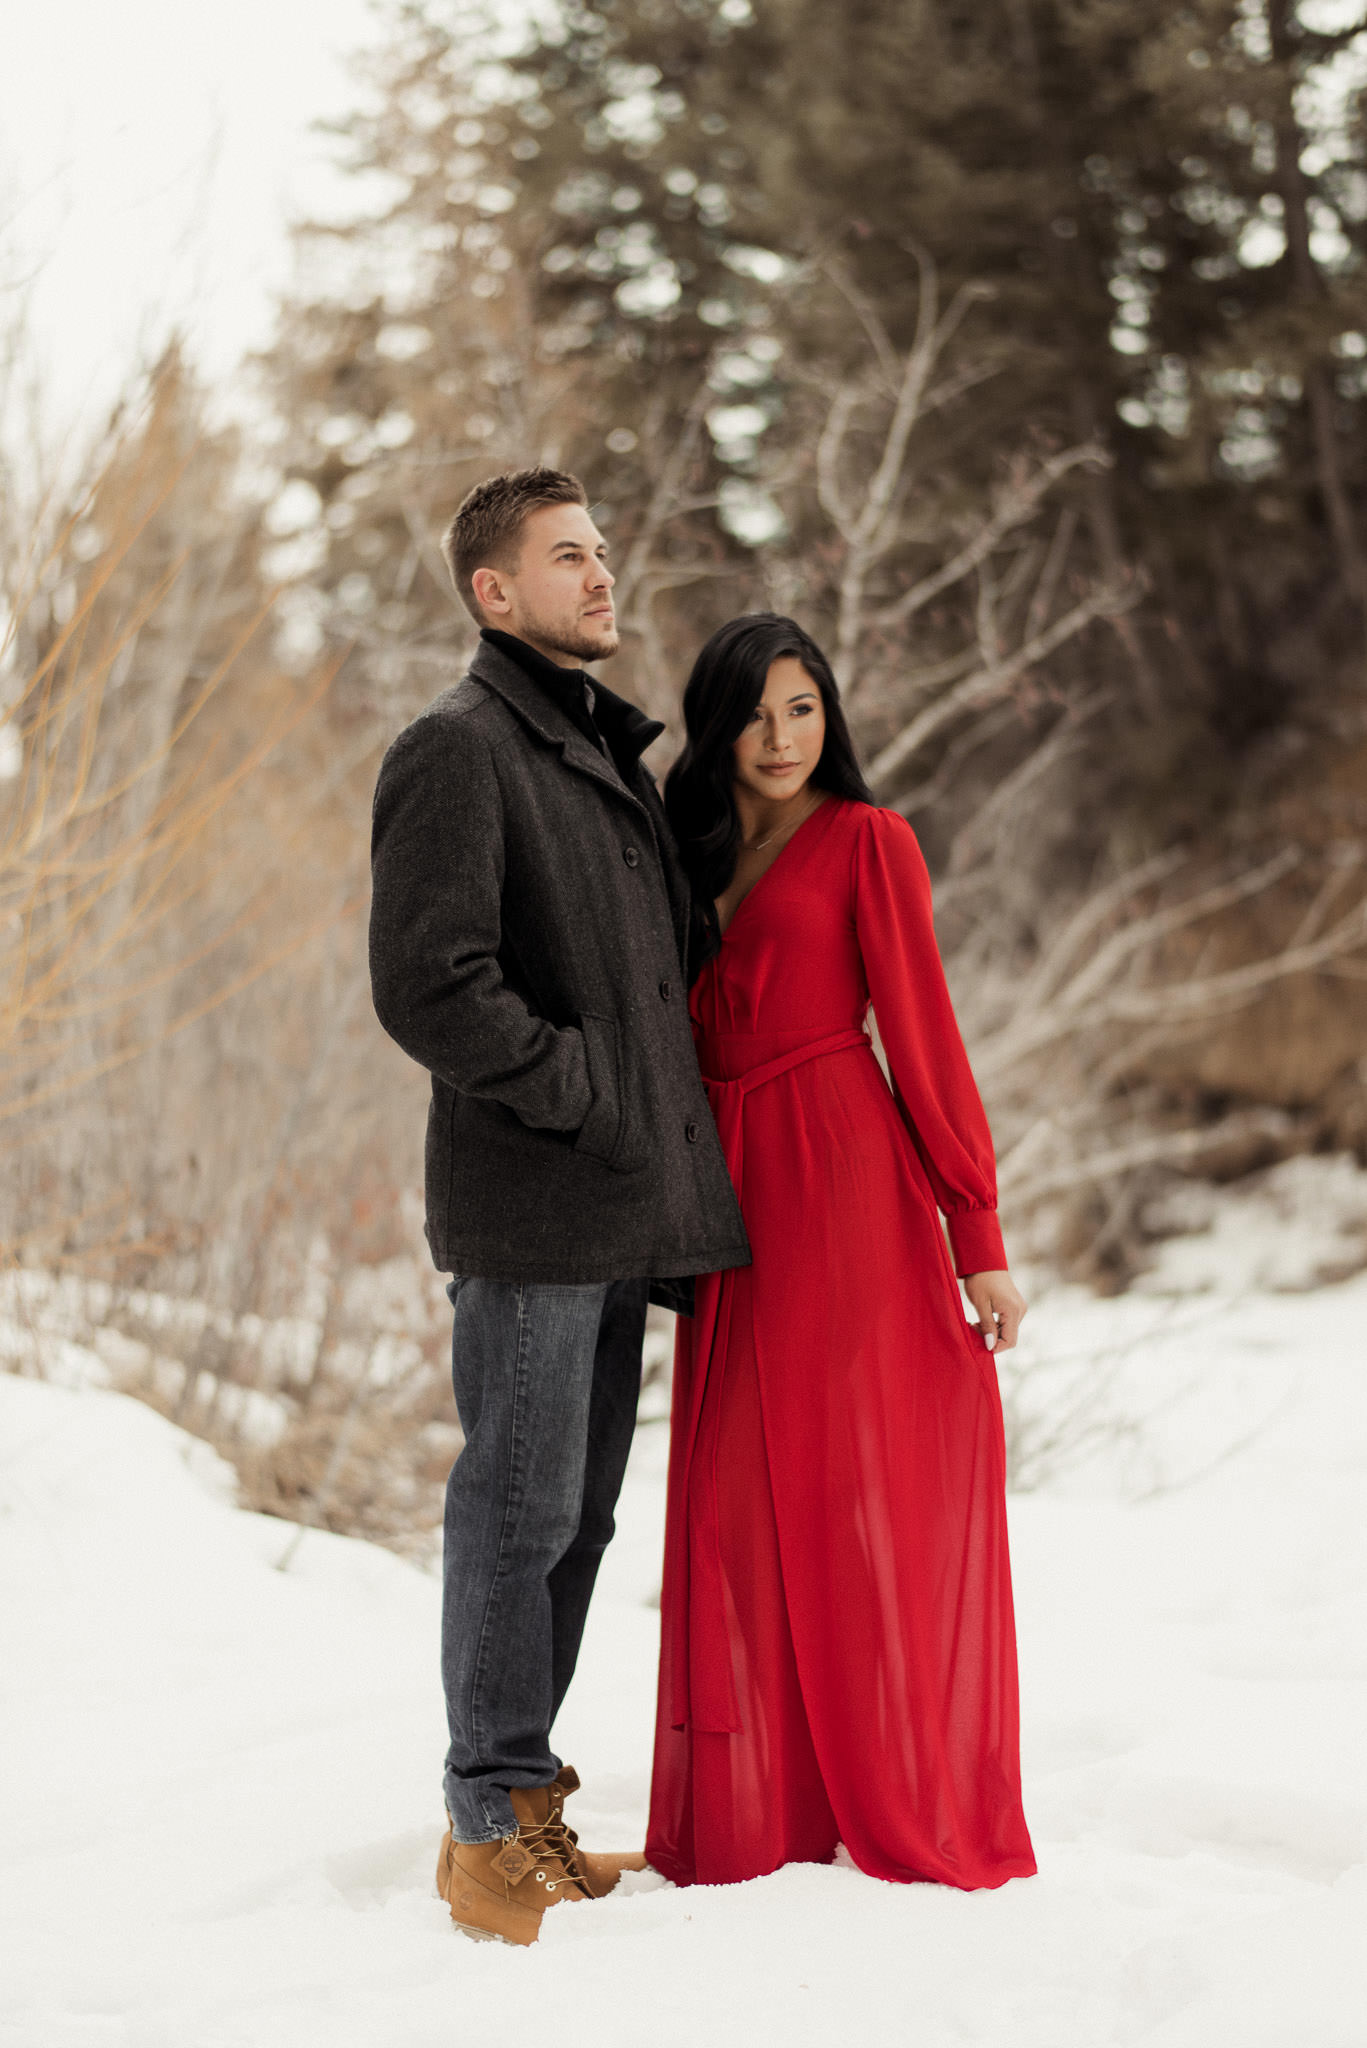 sandra-ryan-colorado-winter-snow-engagement-couples-valentines-red-houston-photographer-sm-8.jpg